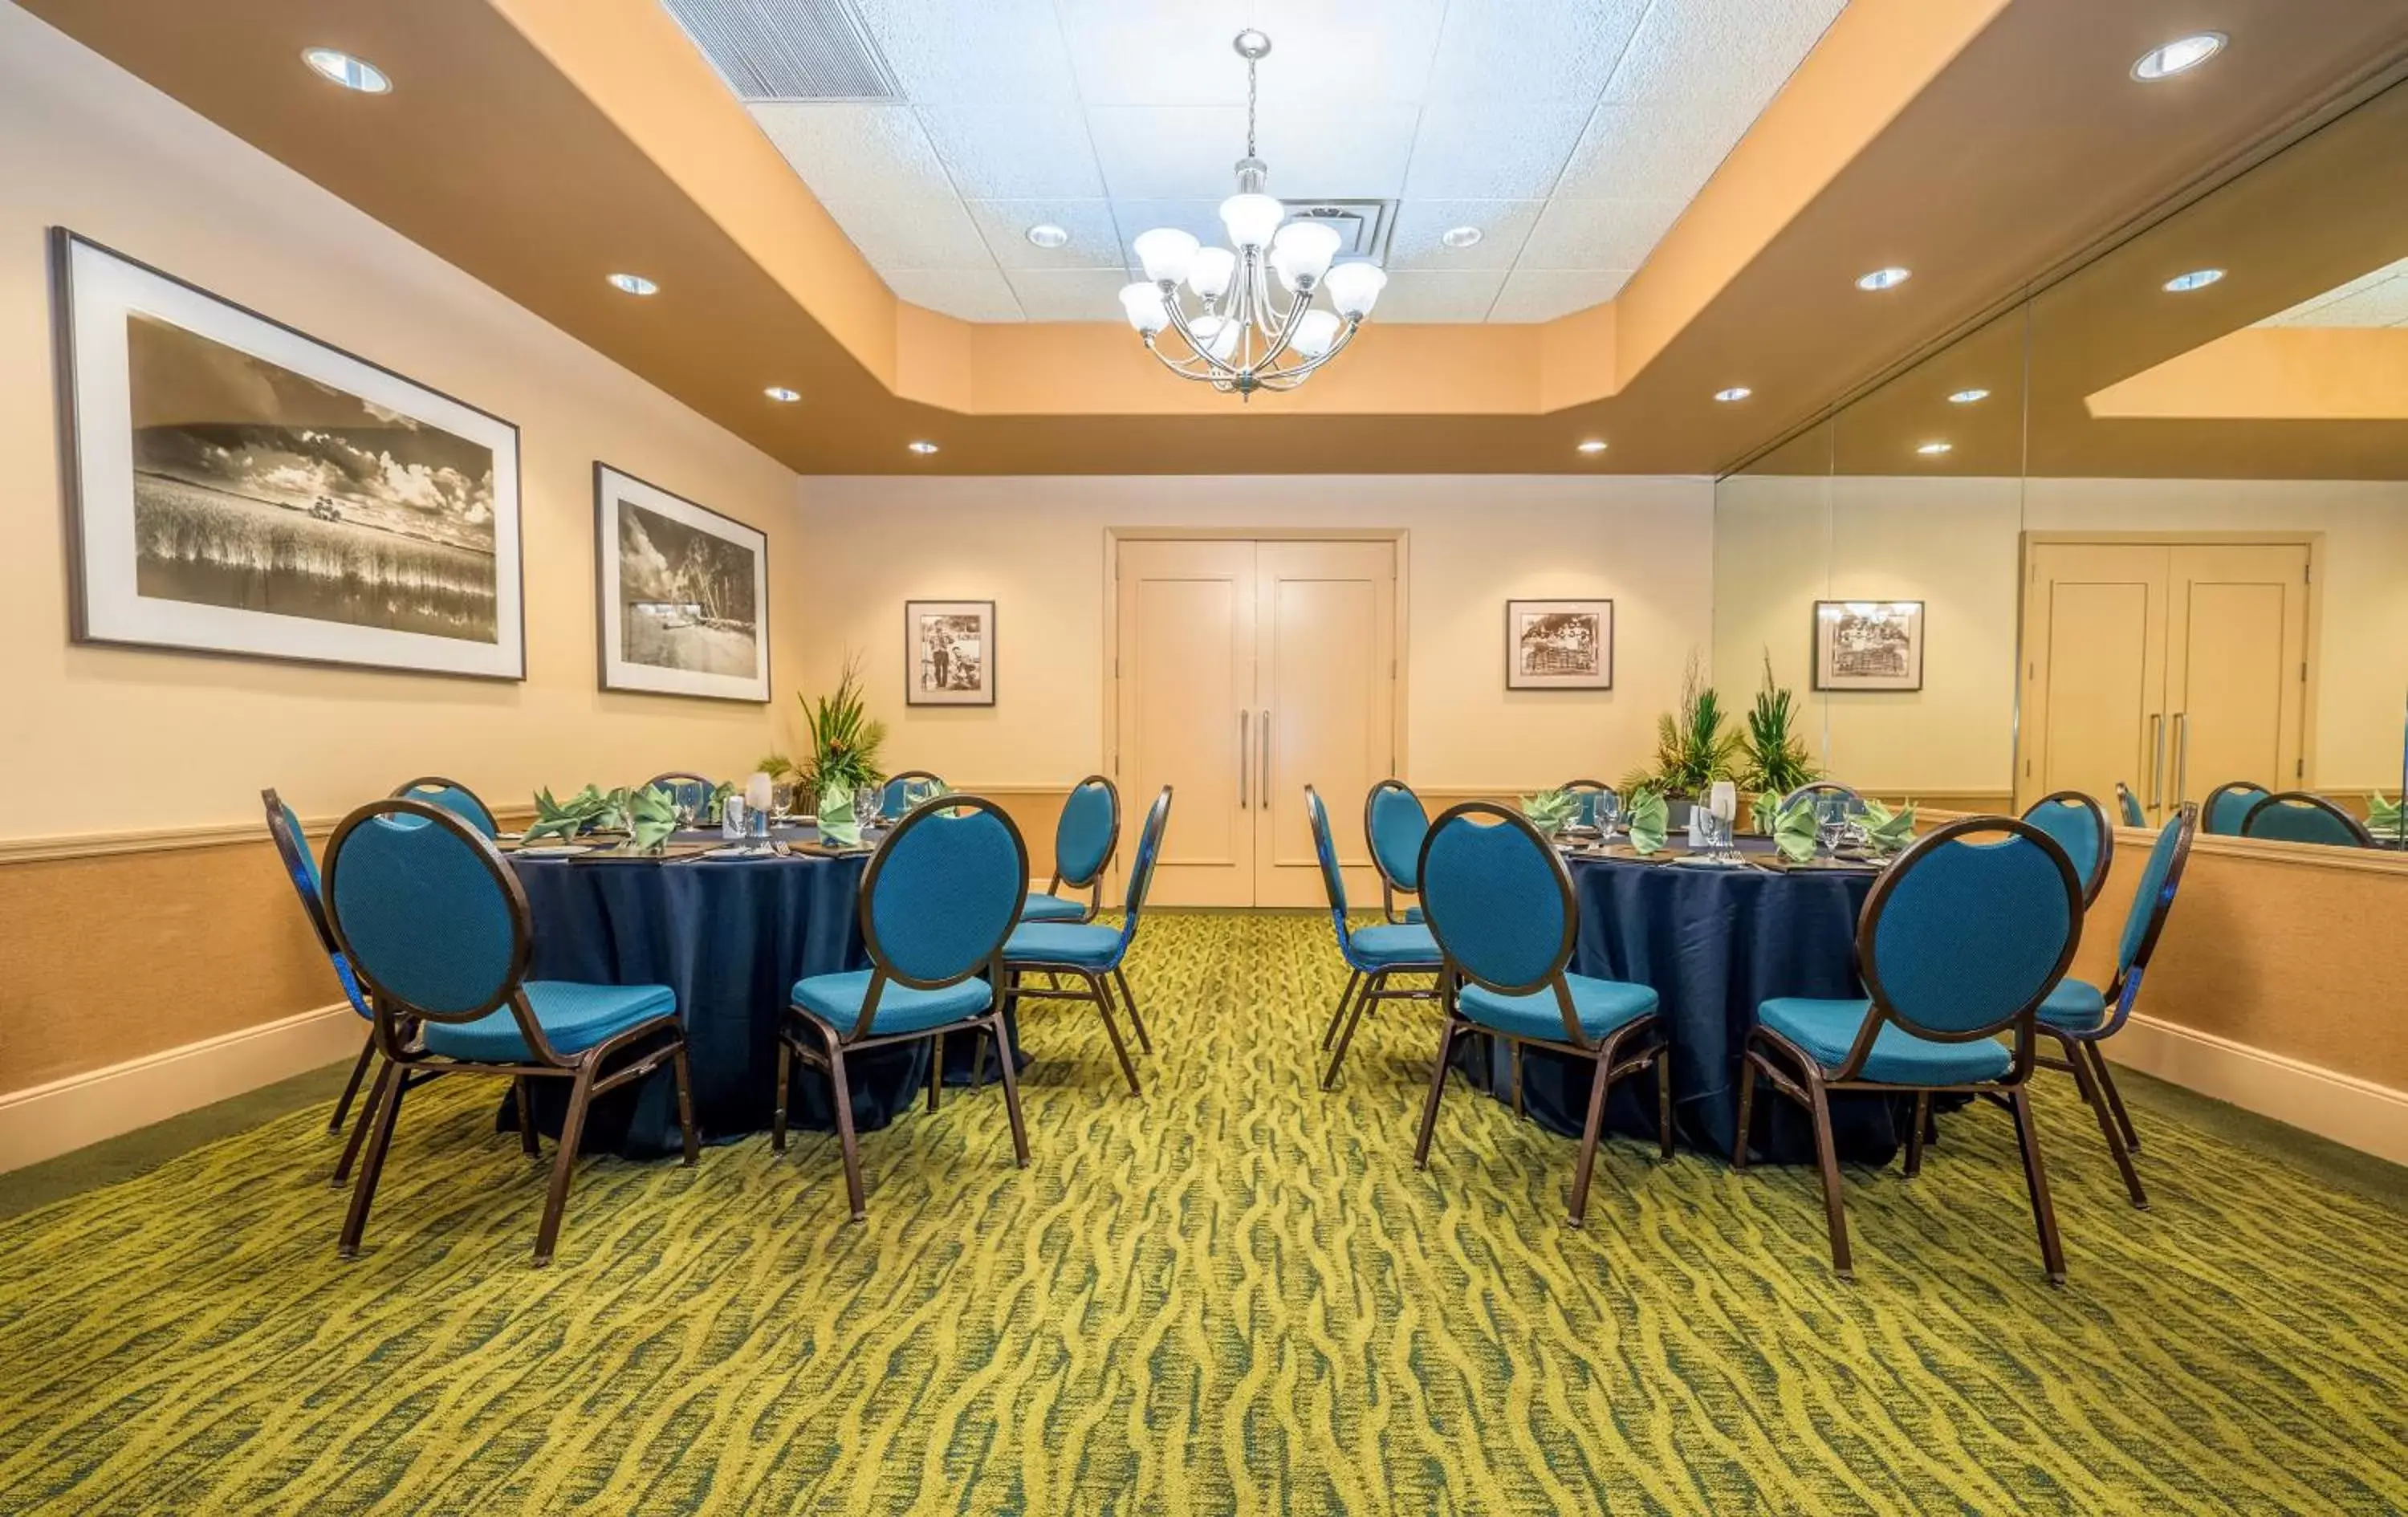 Restaurant/Places to Eat in Rosen Centre Hotel Orlando Convention Center